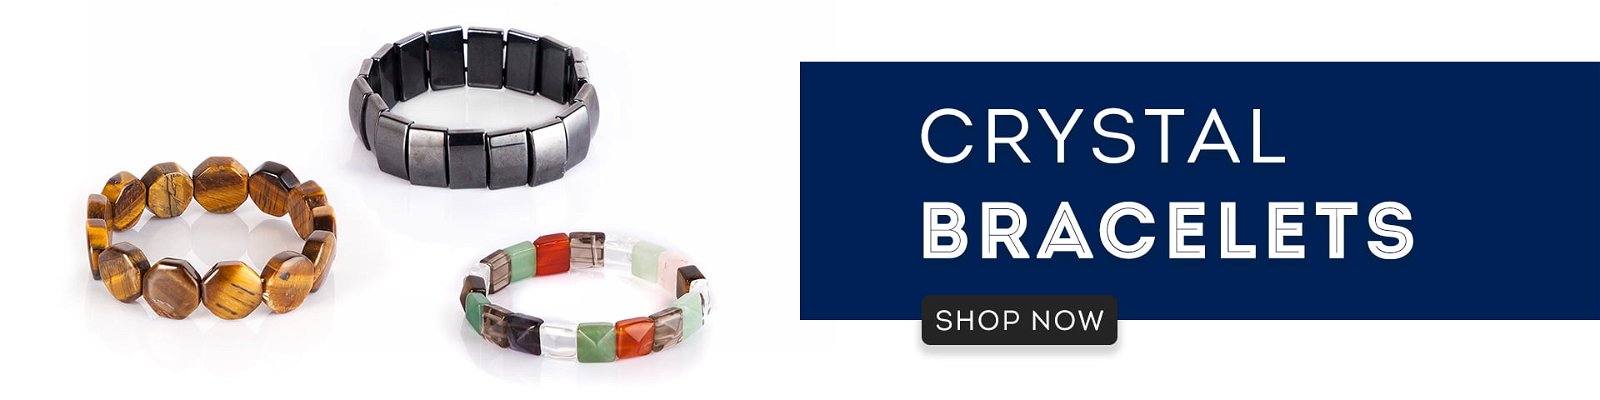 Shastrafy Website Slider - Bracelet